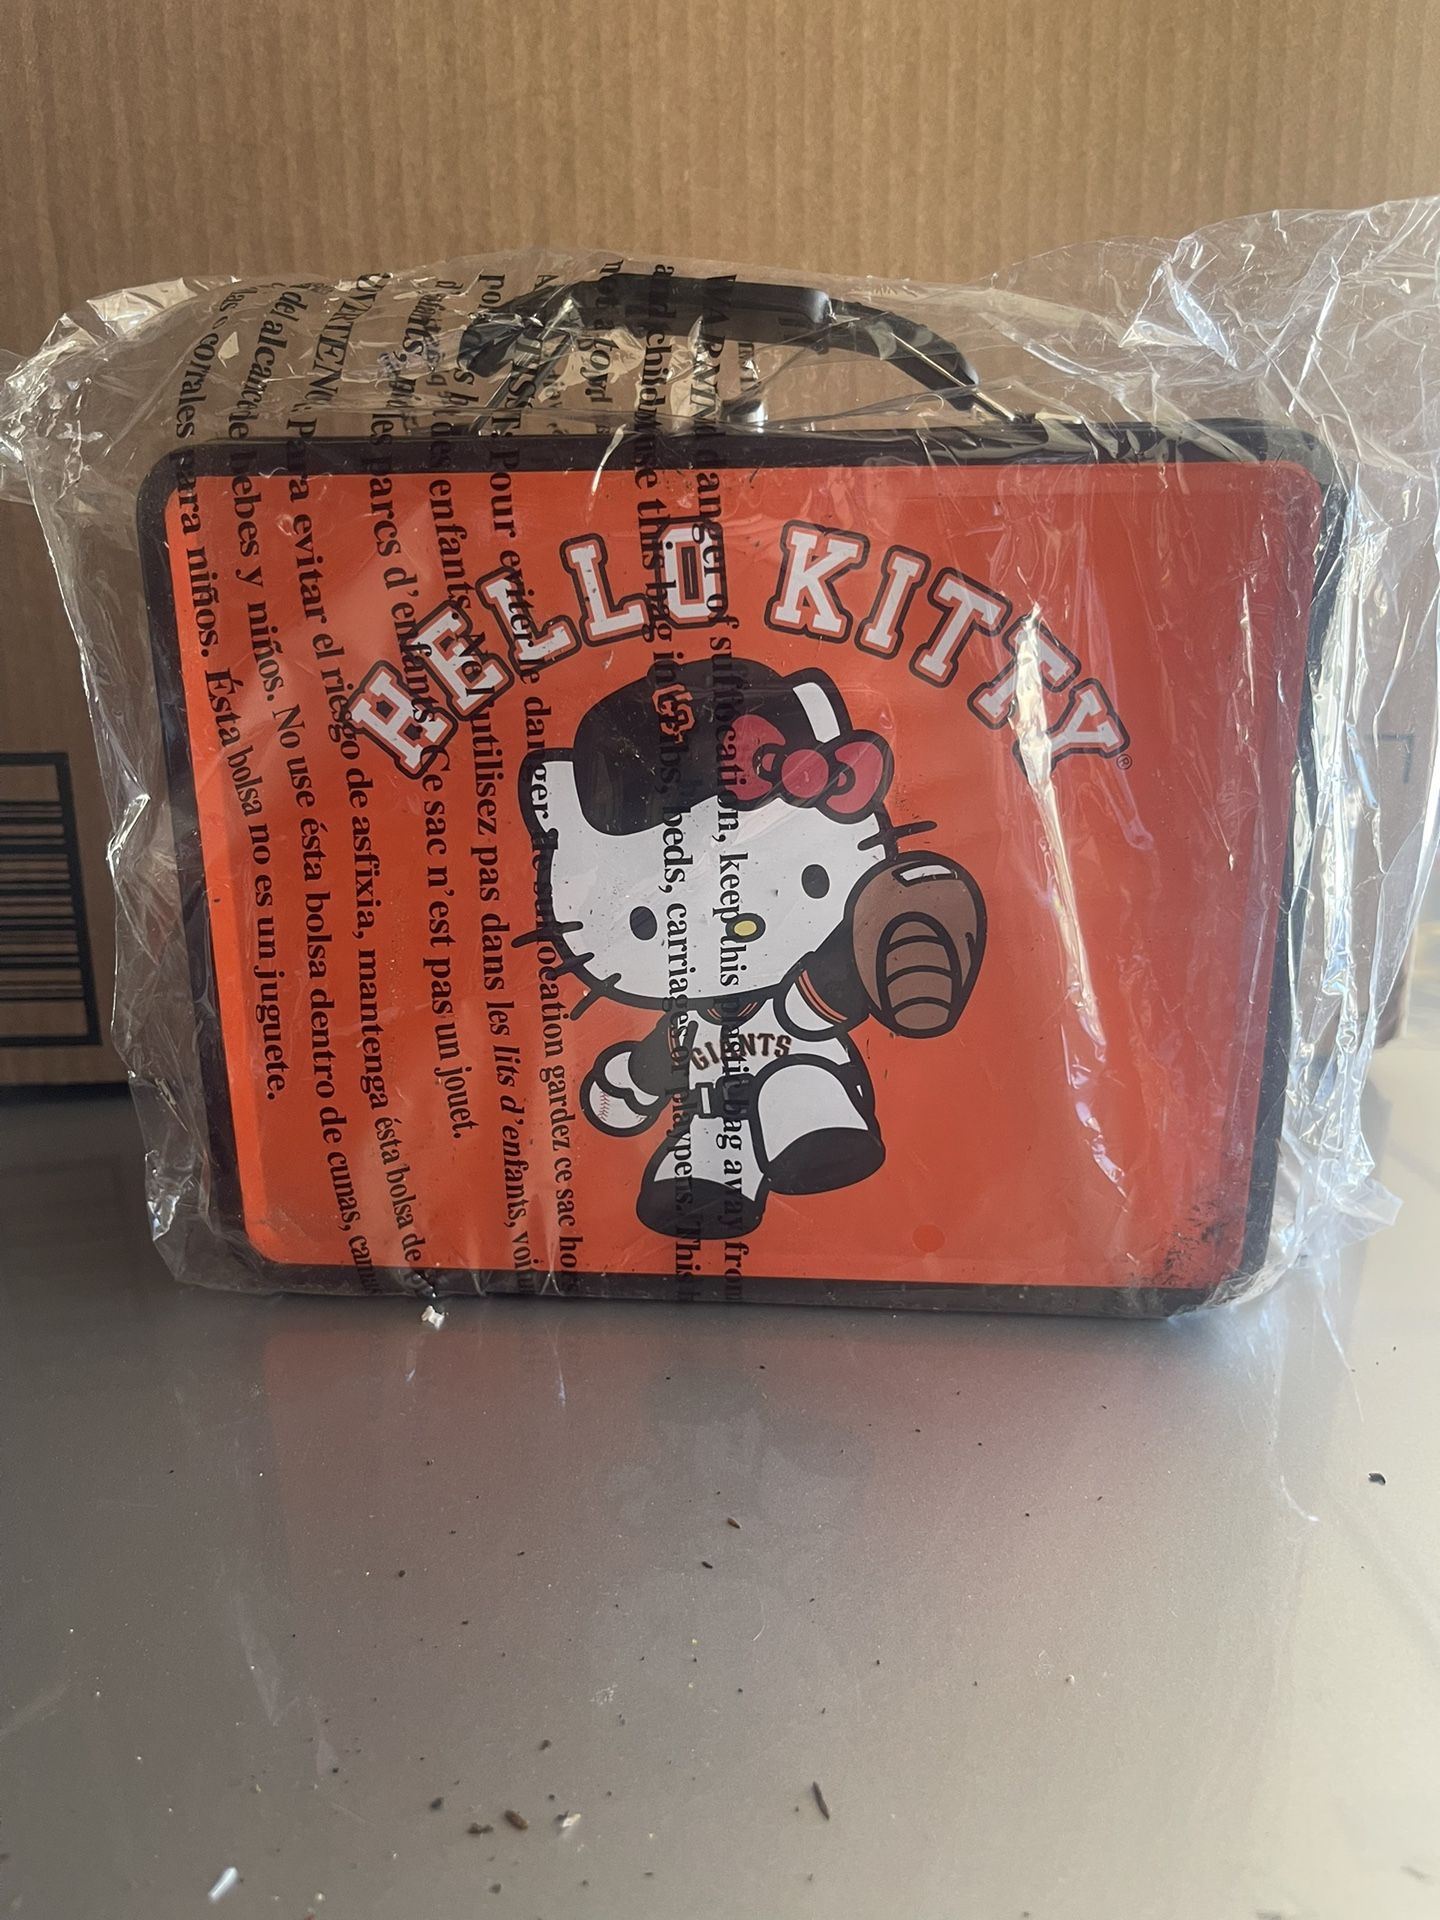 SF Giants Hello Kitty Lunch Box